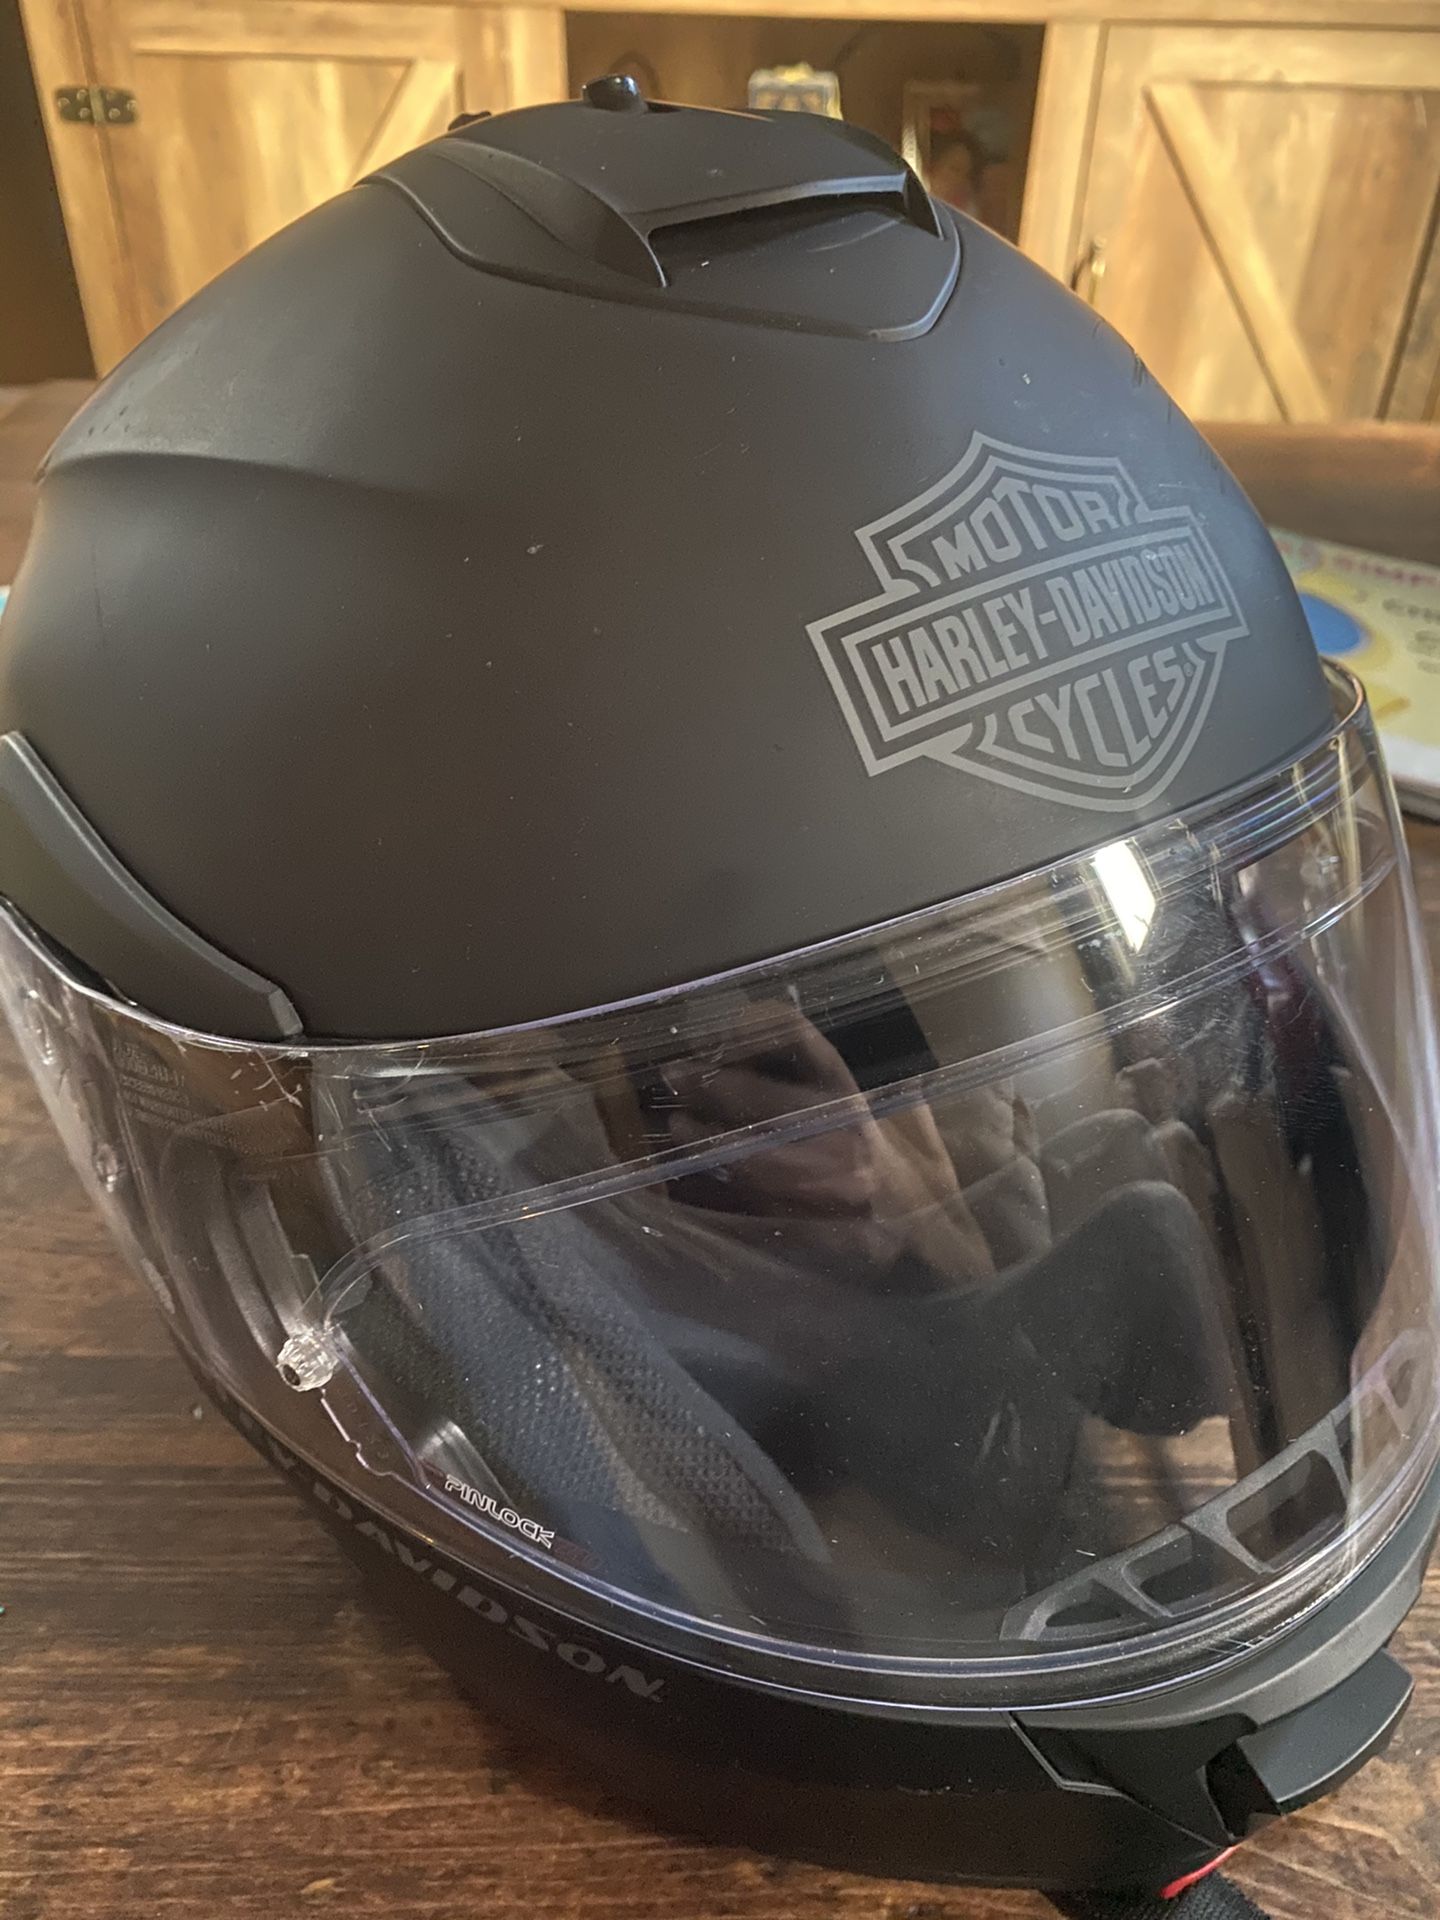 Harley Davidson Helmet-Size M